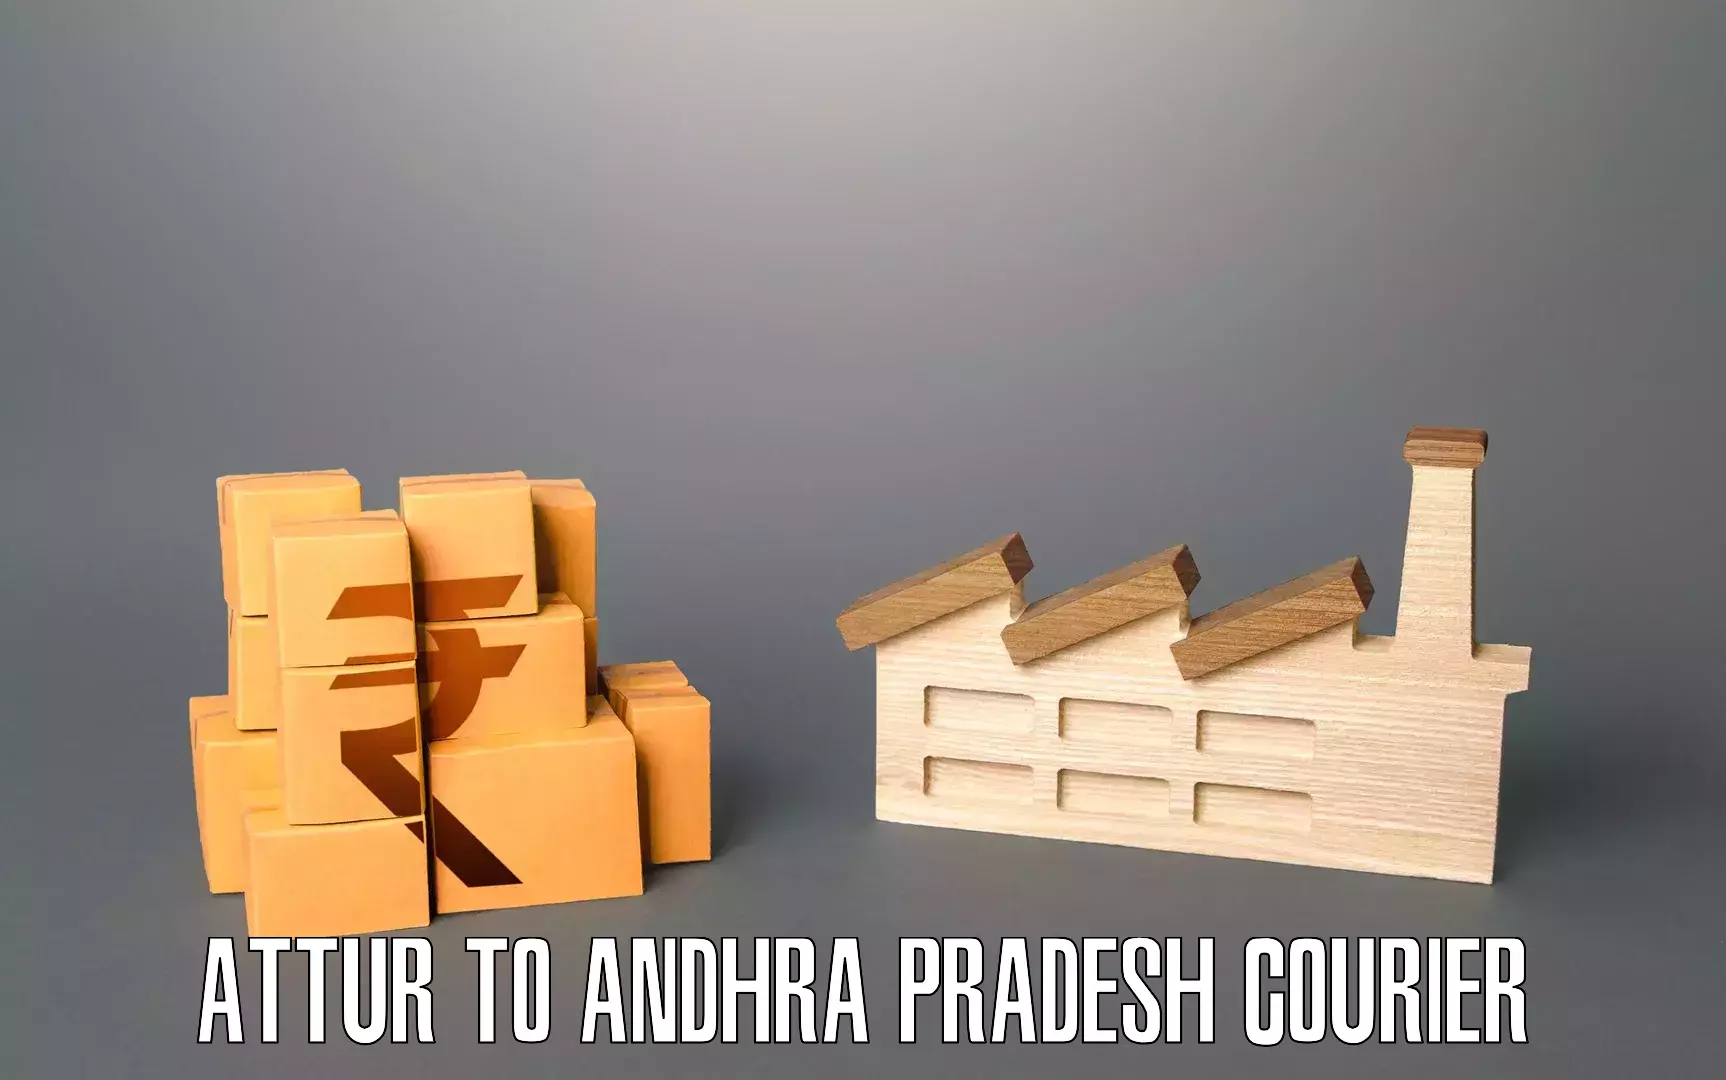 Professional moving company Attur to Andhra Pradesh